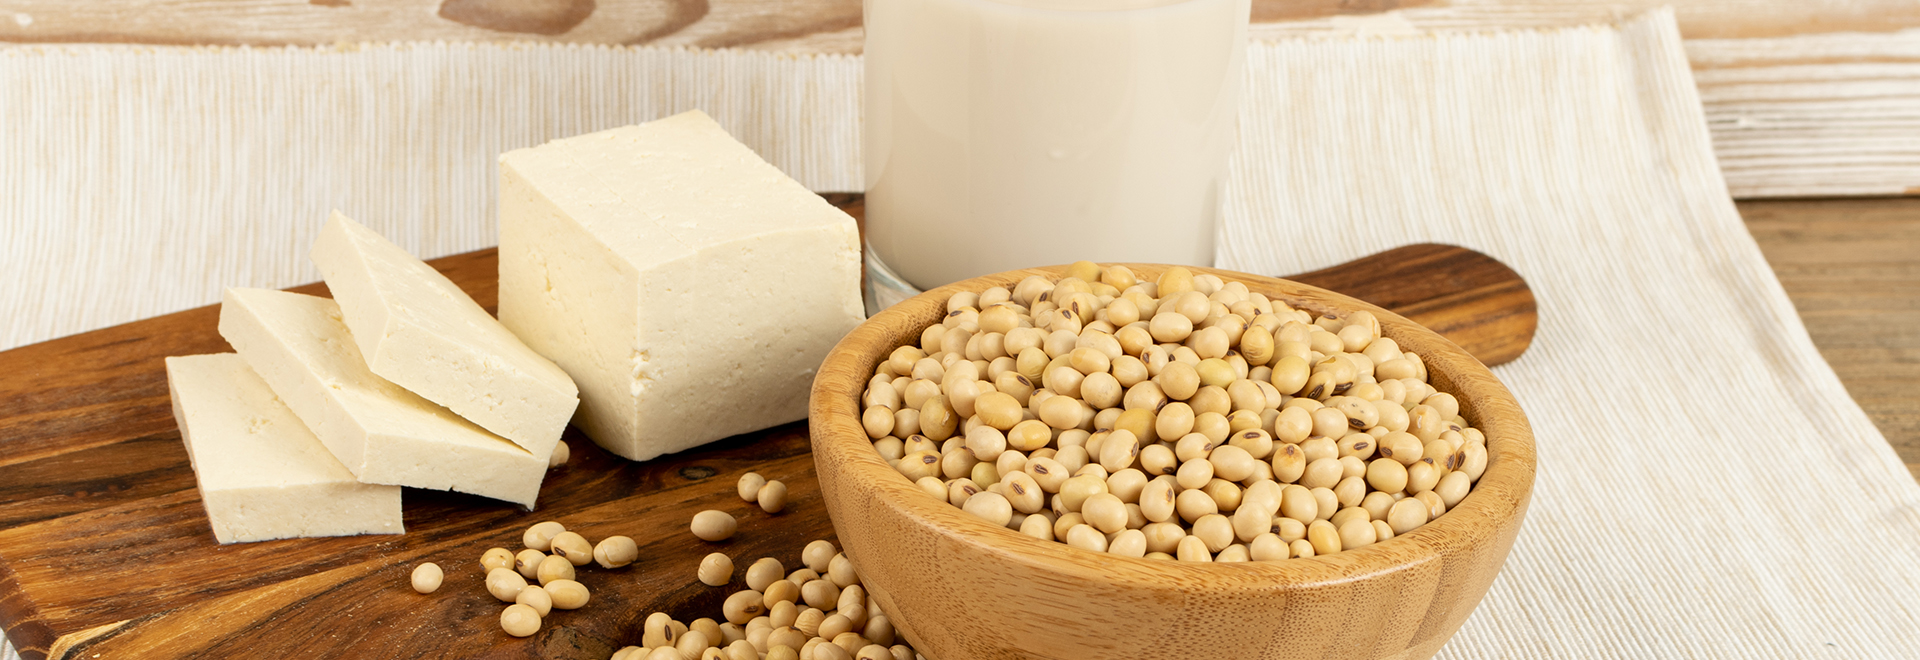 understanding-the-nutritions-in-tofu-soy-milk-dried-tofu